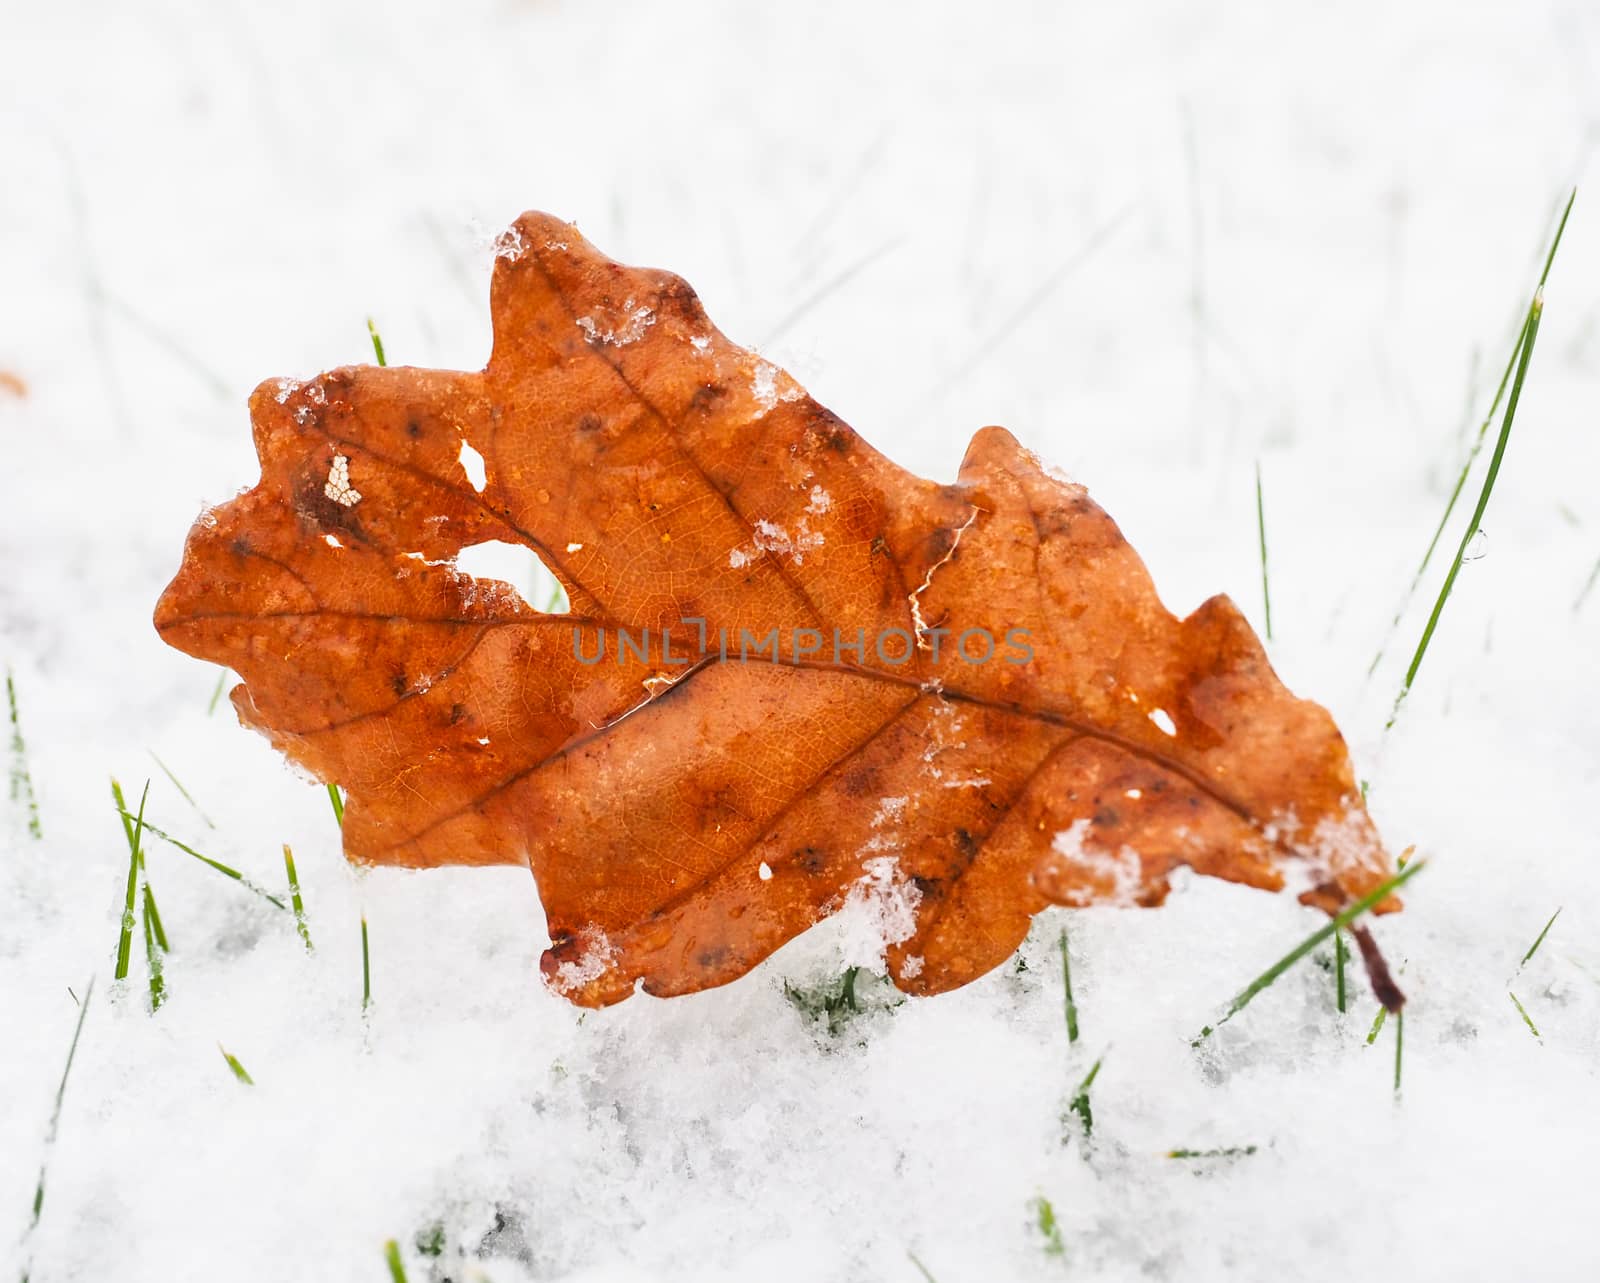 Brown oak tree leaf on lawn with a fresh layer of snow by Arvebettum